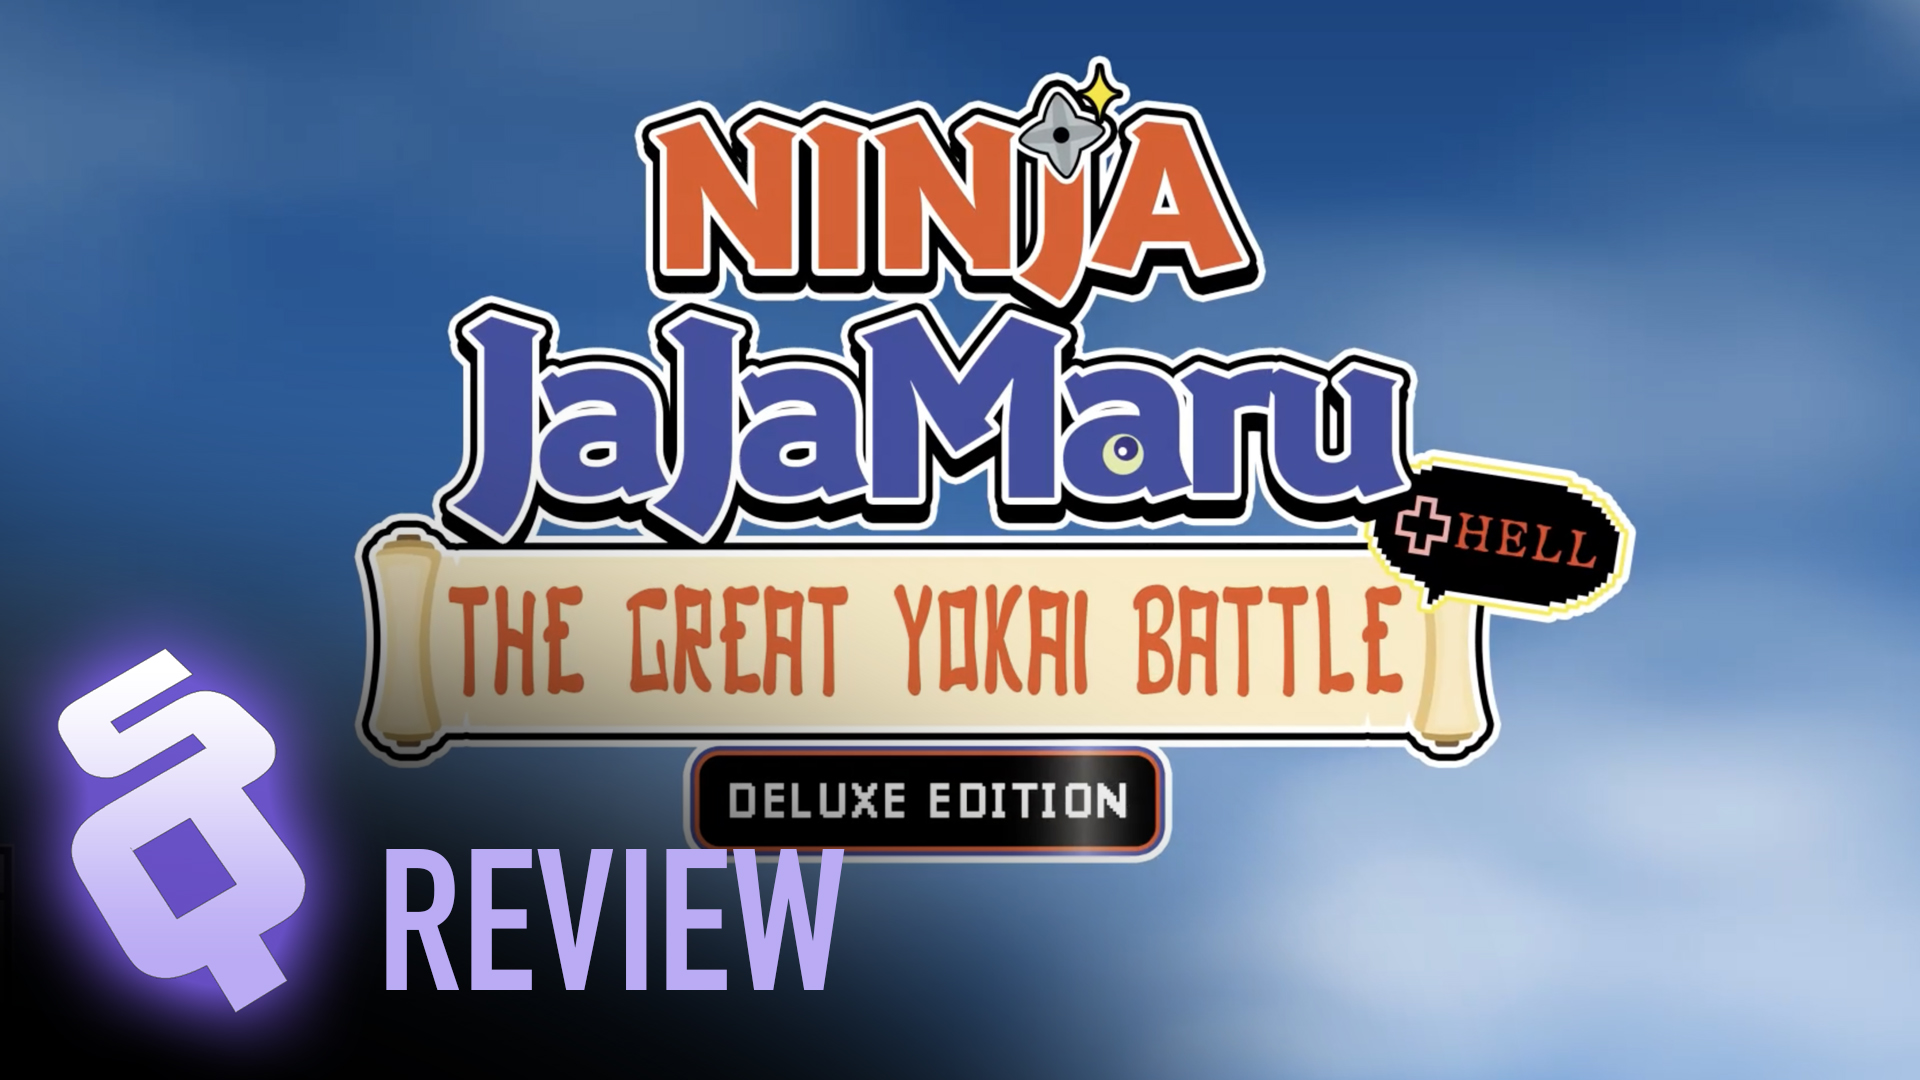 Ninja JaJaMaru: The Great Yokai Battle +Hell Deluxe Edition review